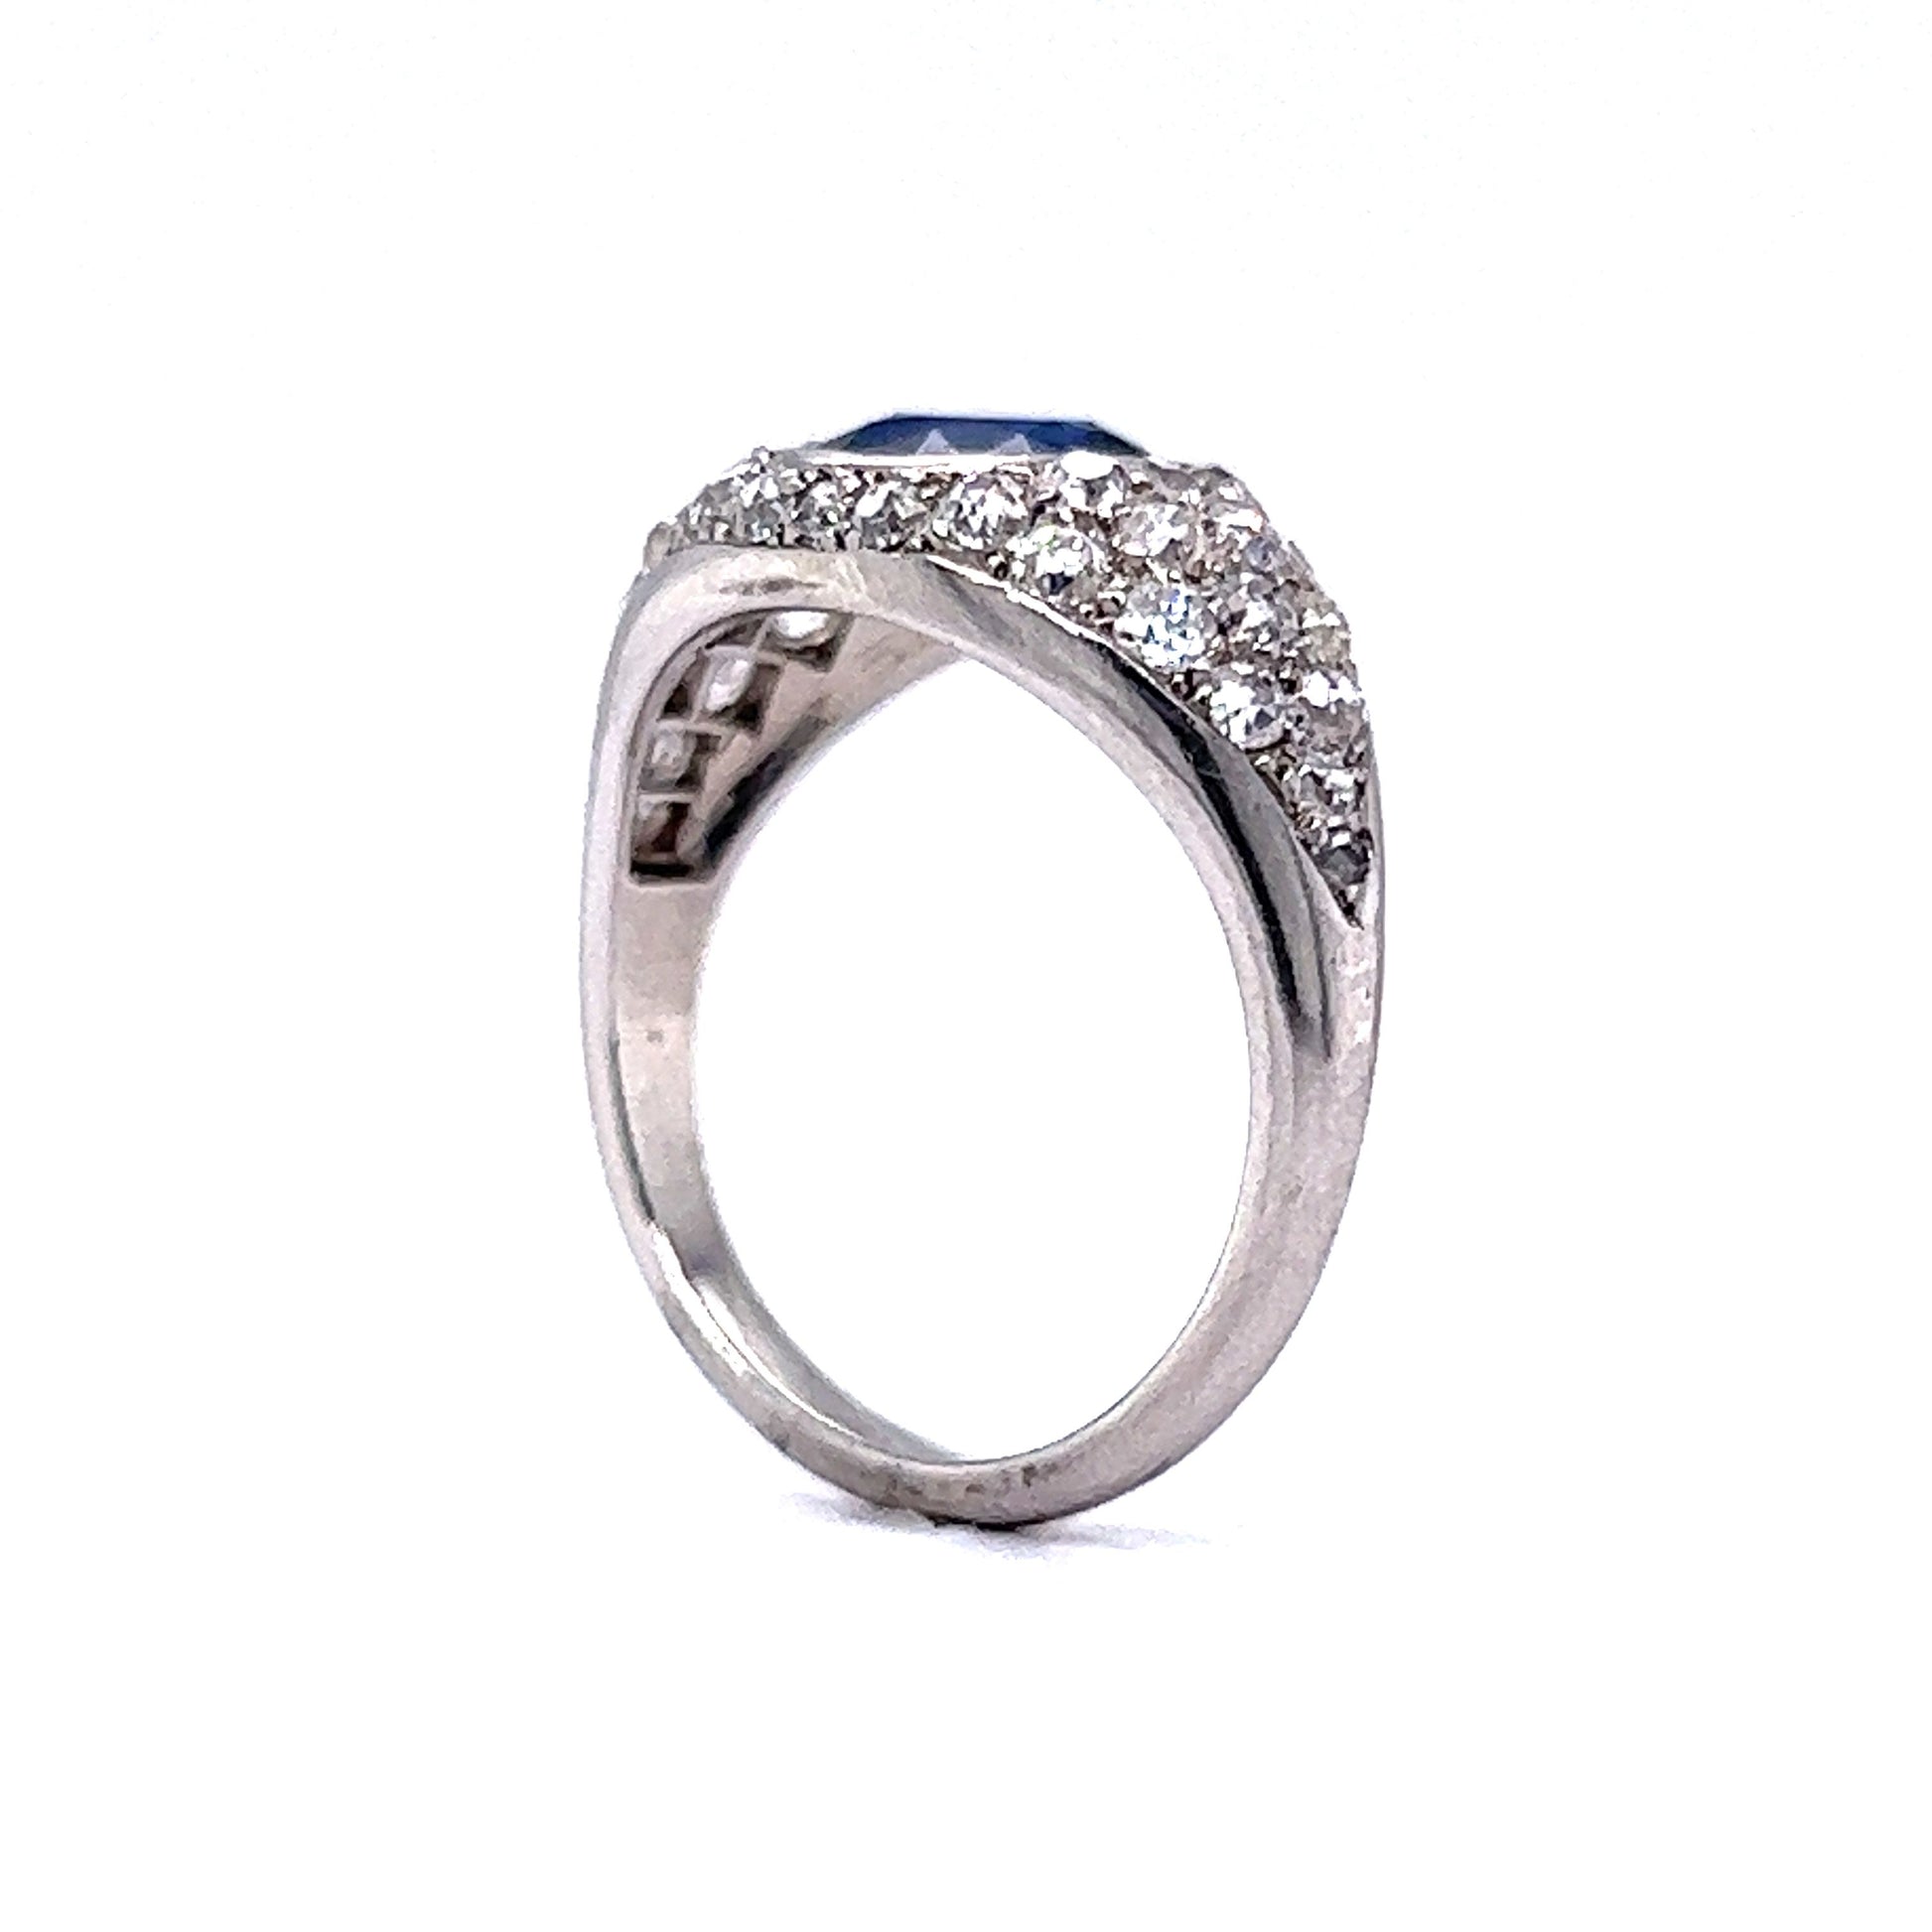 Art Deco Bezel Set Sapphire & Diamond Engagement Ring in Platinum